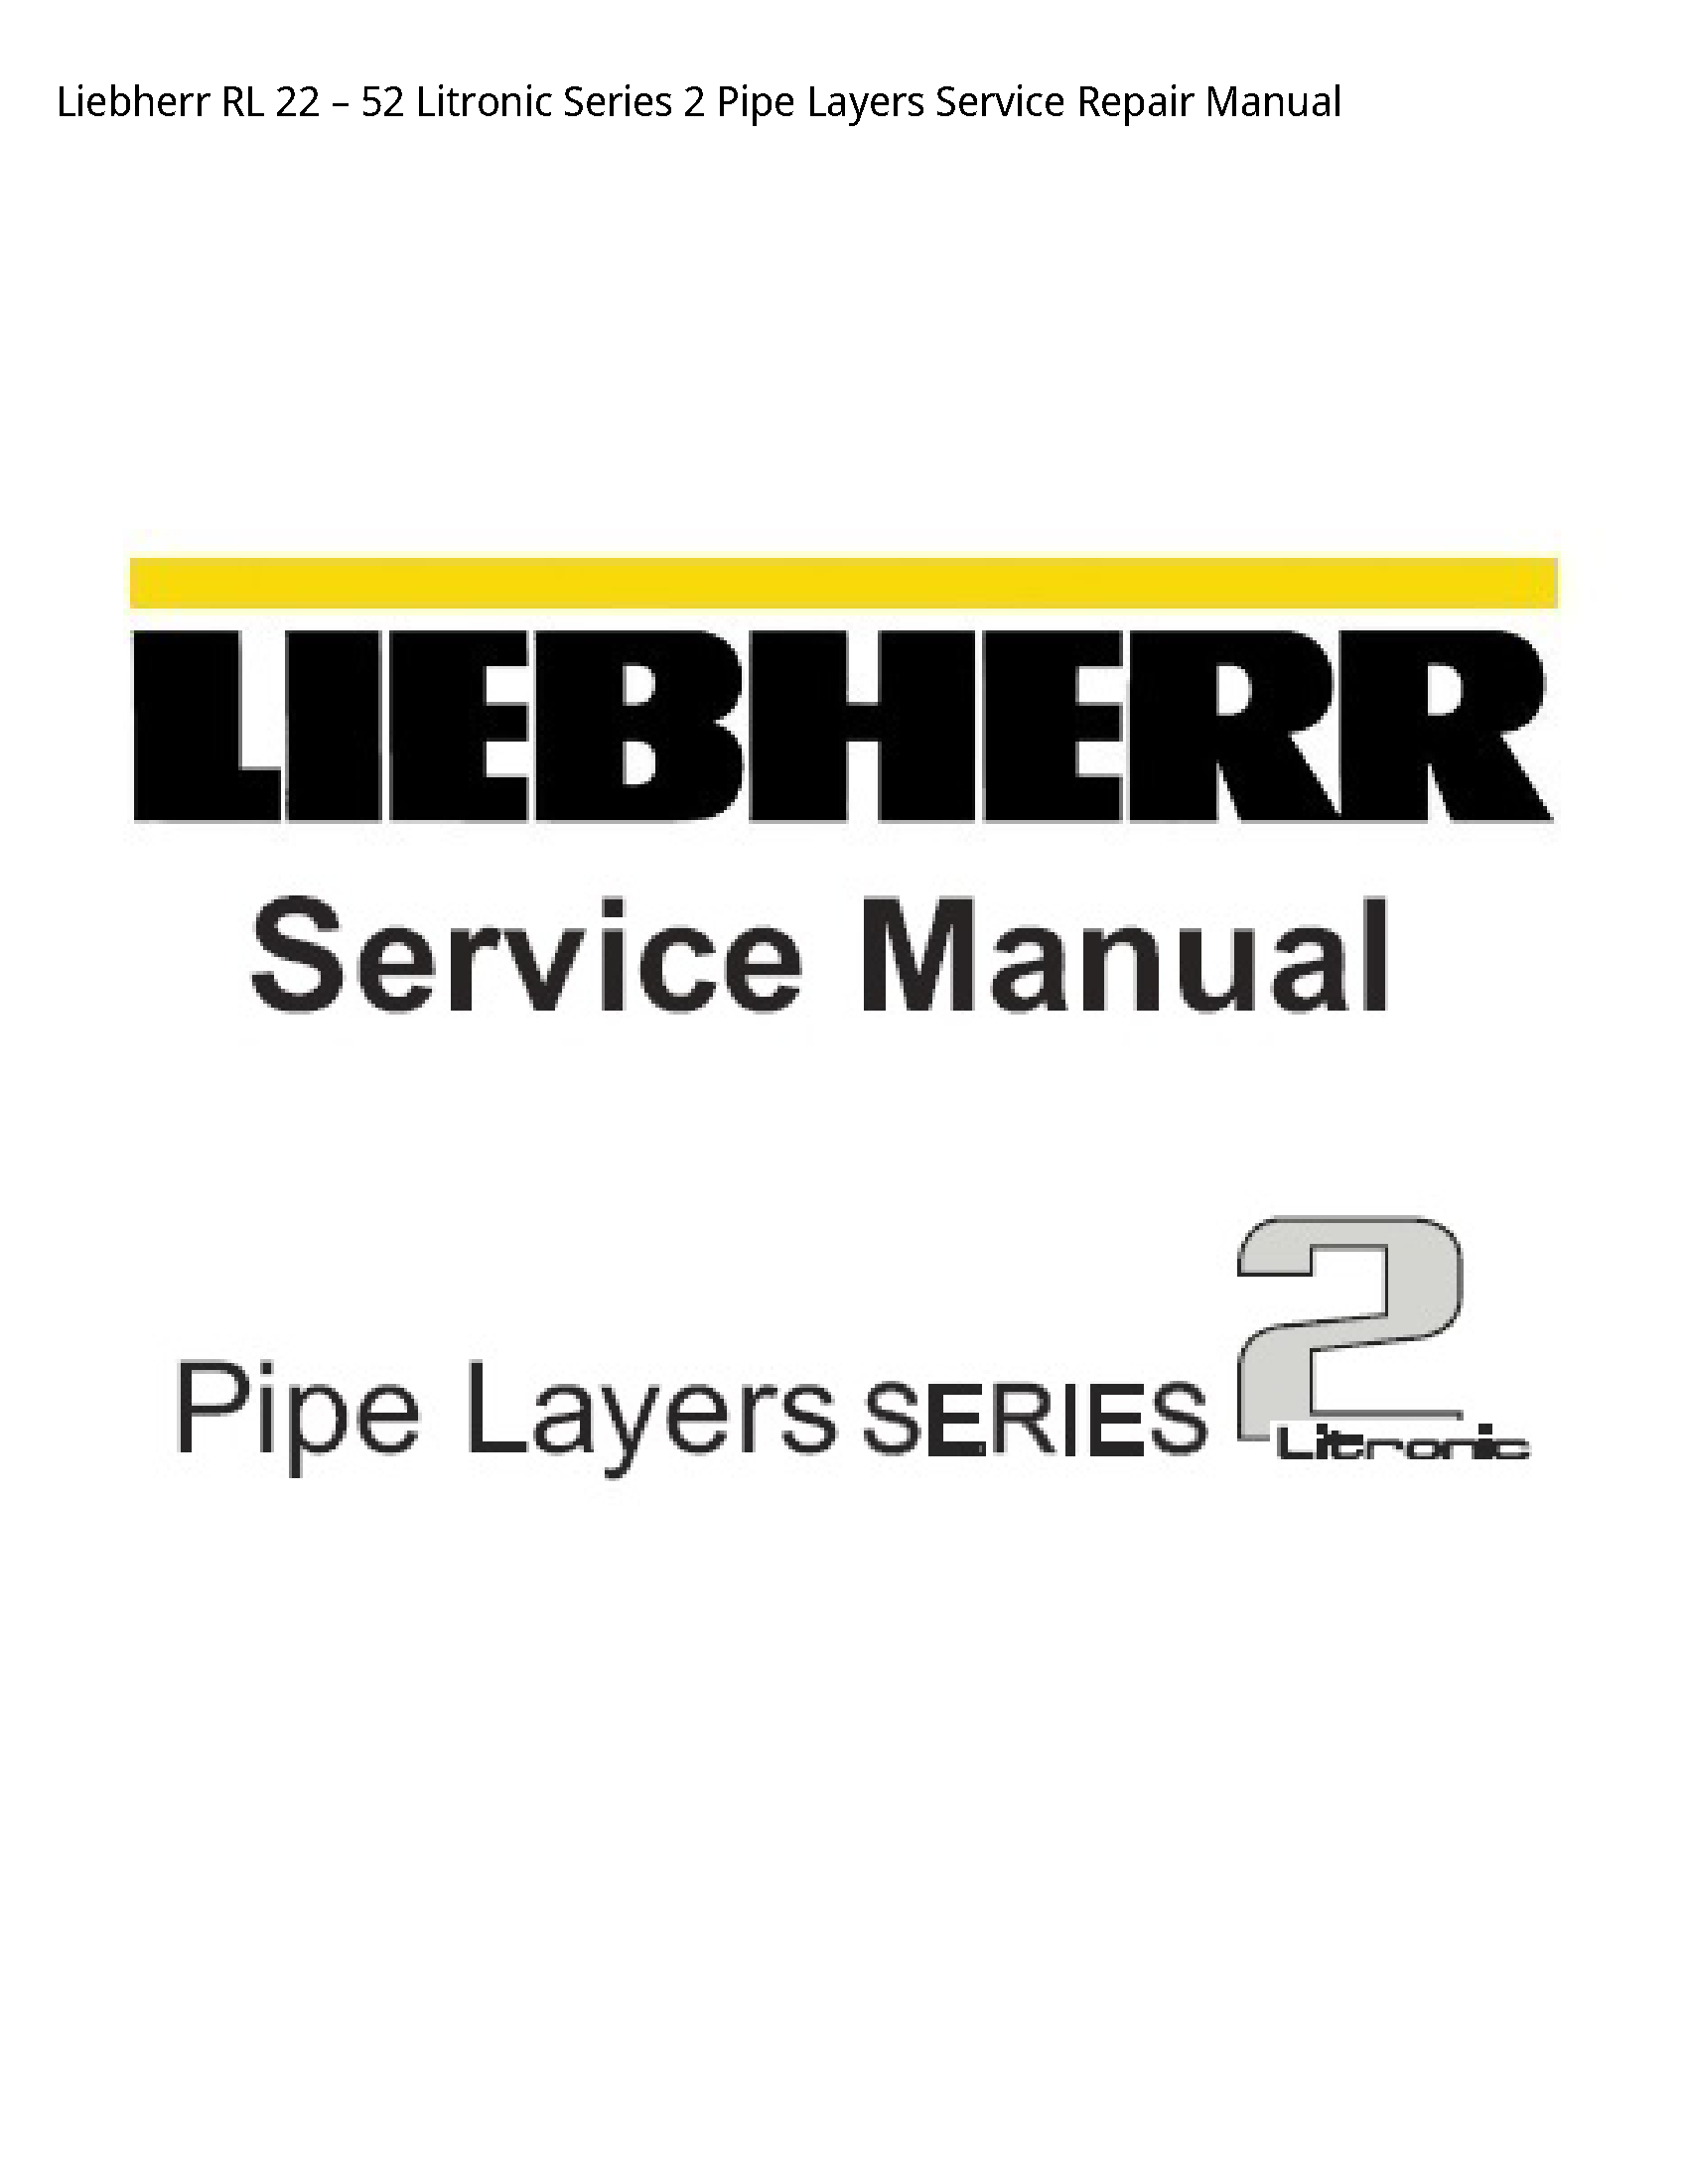 Liebherr 22 RL Litronic Series Pipe Layers manual